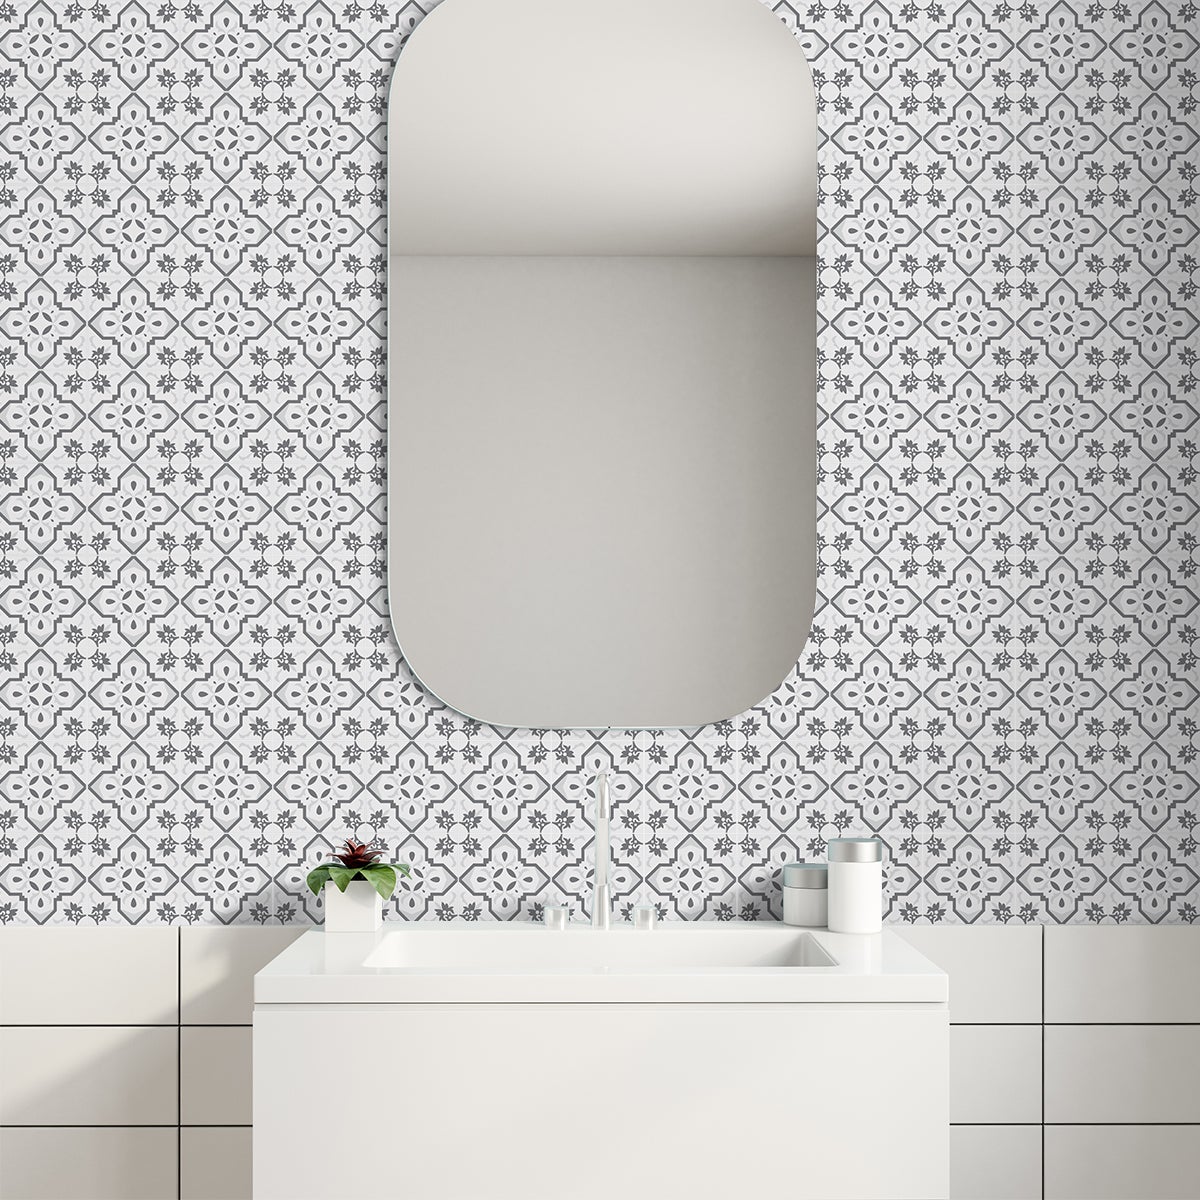 9 vinilos azulejos sariotha - adhesivo de pared - revestimiento sticker  mural decorativo - 30x30cm-9stickers10x10cm